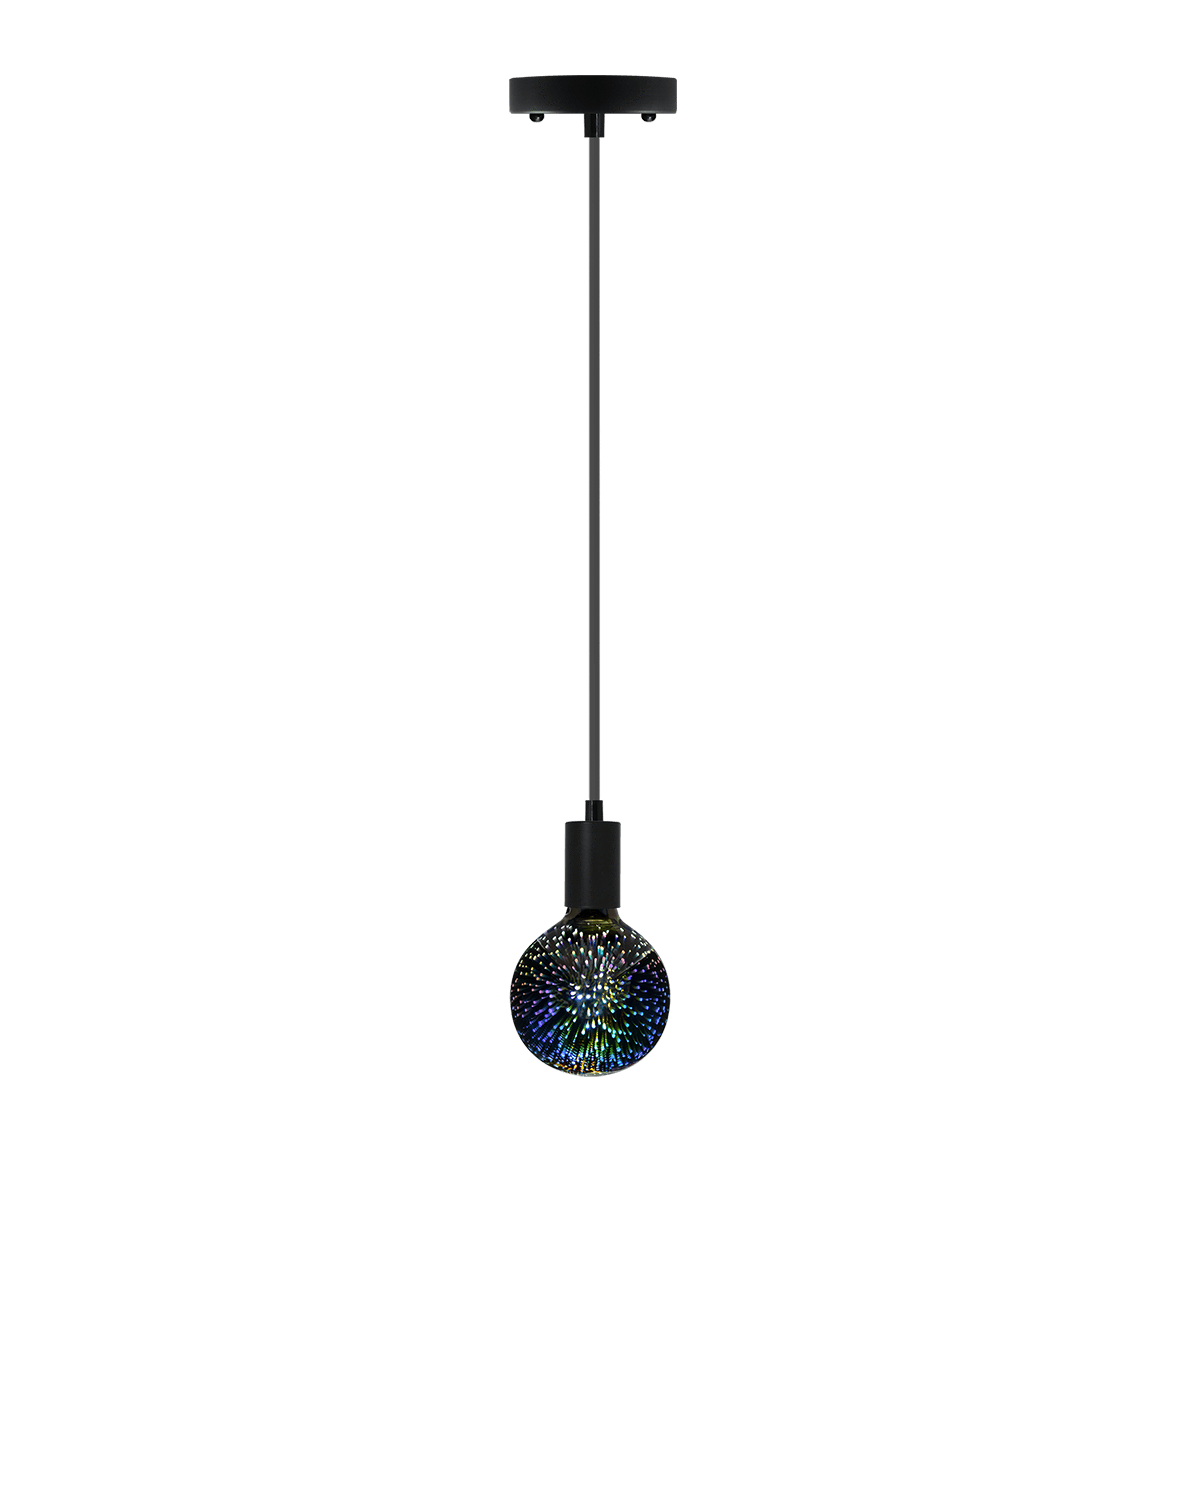 Single Pendant: Black with Firework Bulb Hangout Lighting 